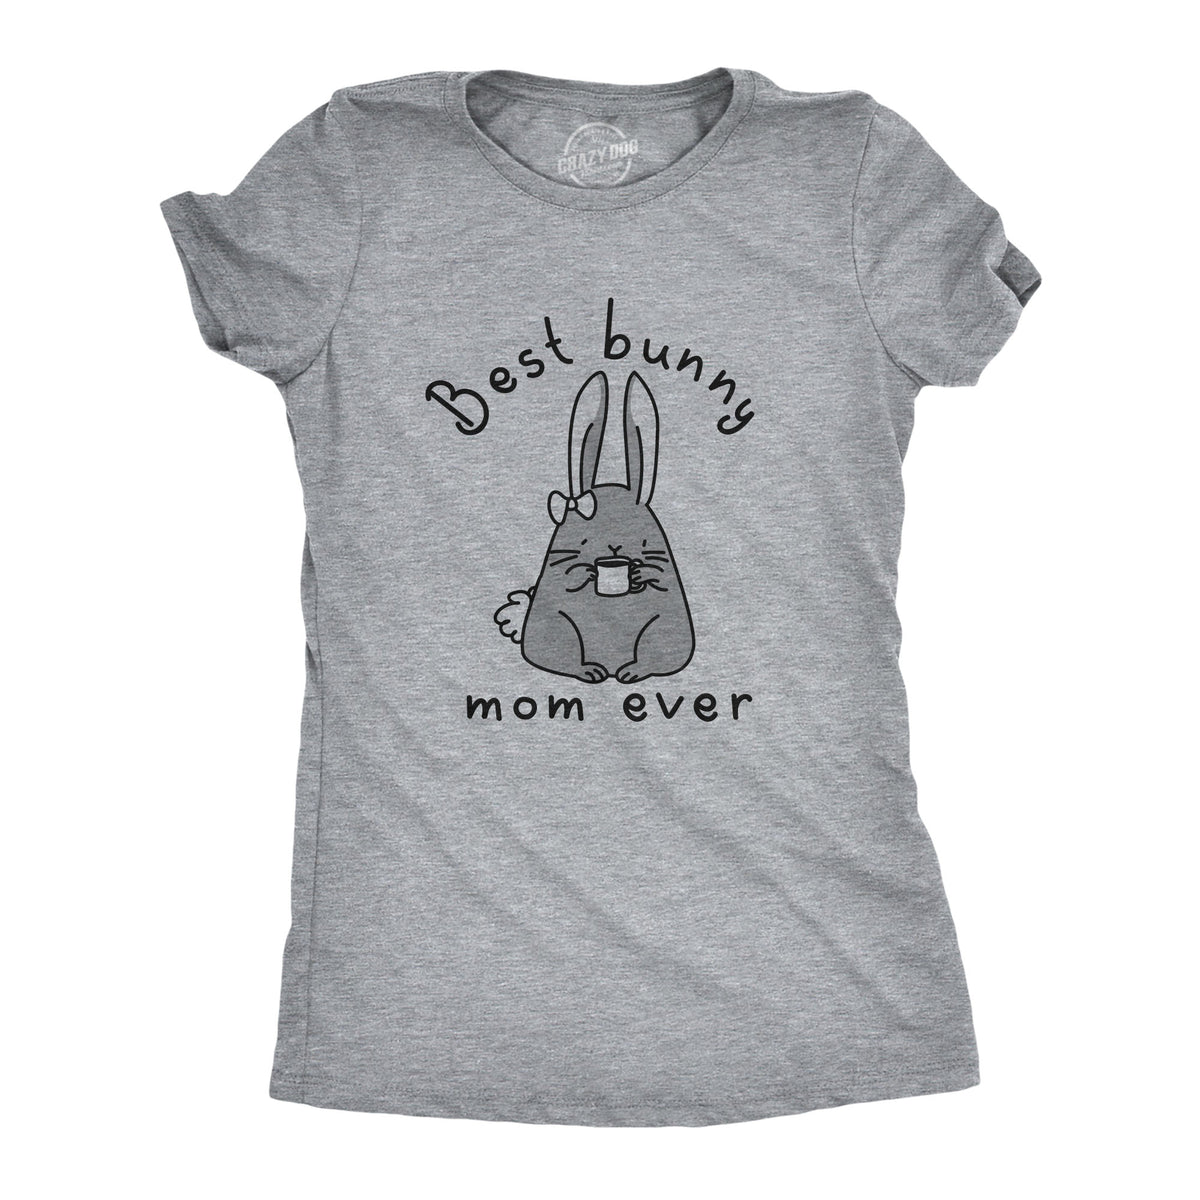 Fun ASCII Bunny Rabbit Meme Holding Your Mom for Christmas present T-Shirt  by Aryaq EvaRo - Fine Art America